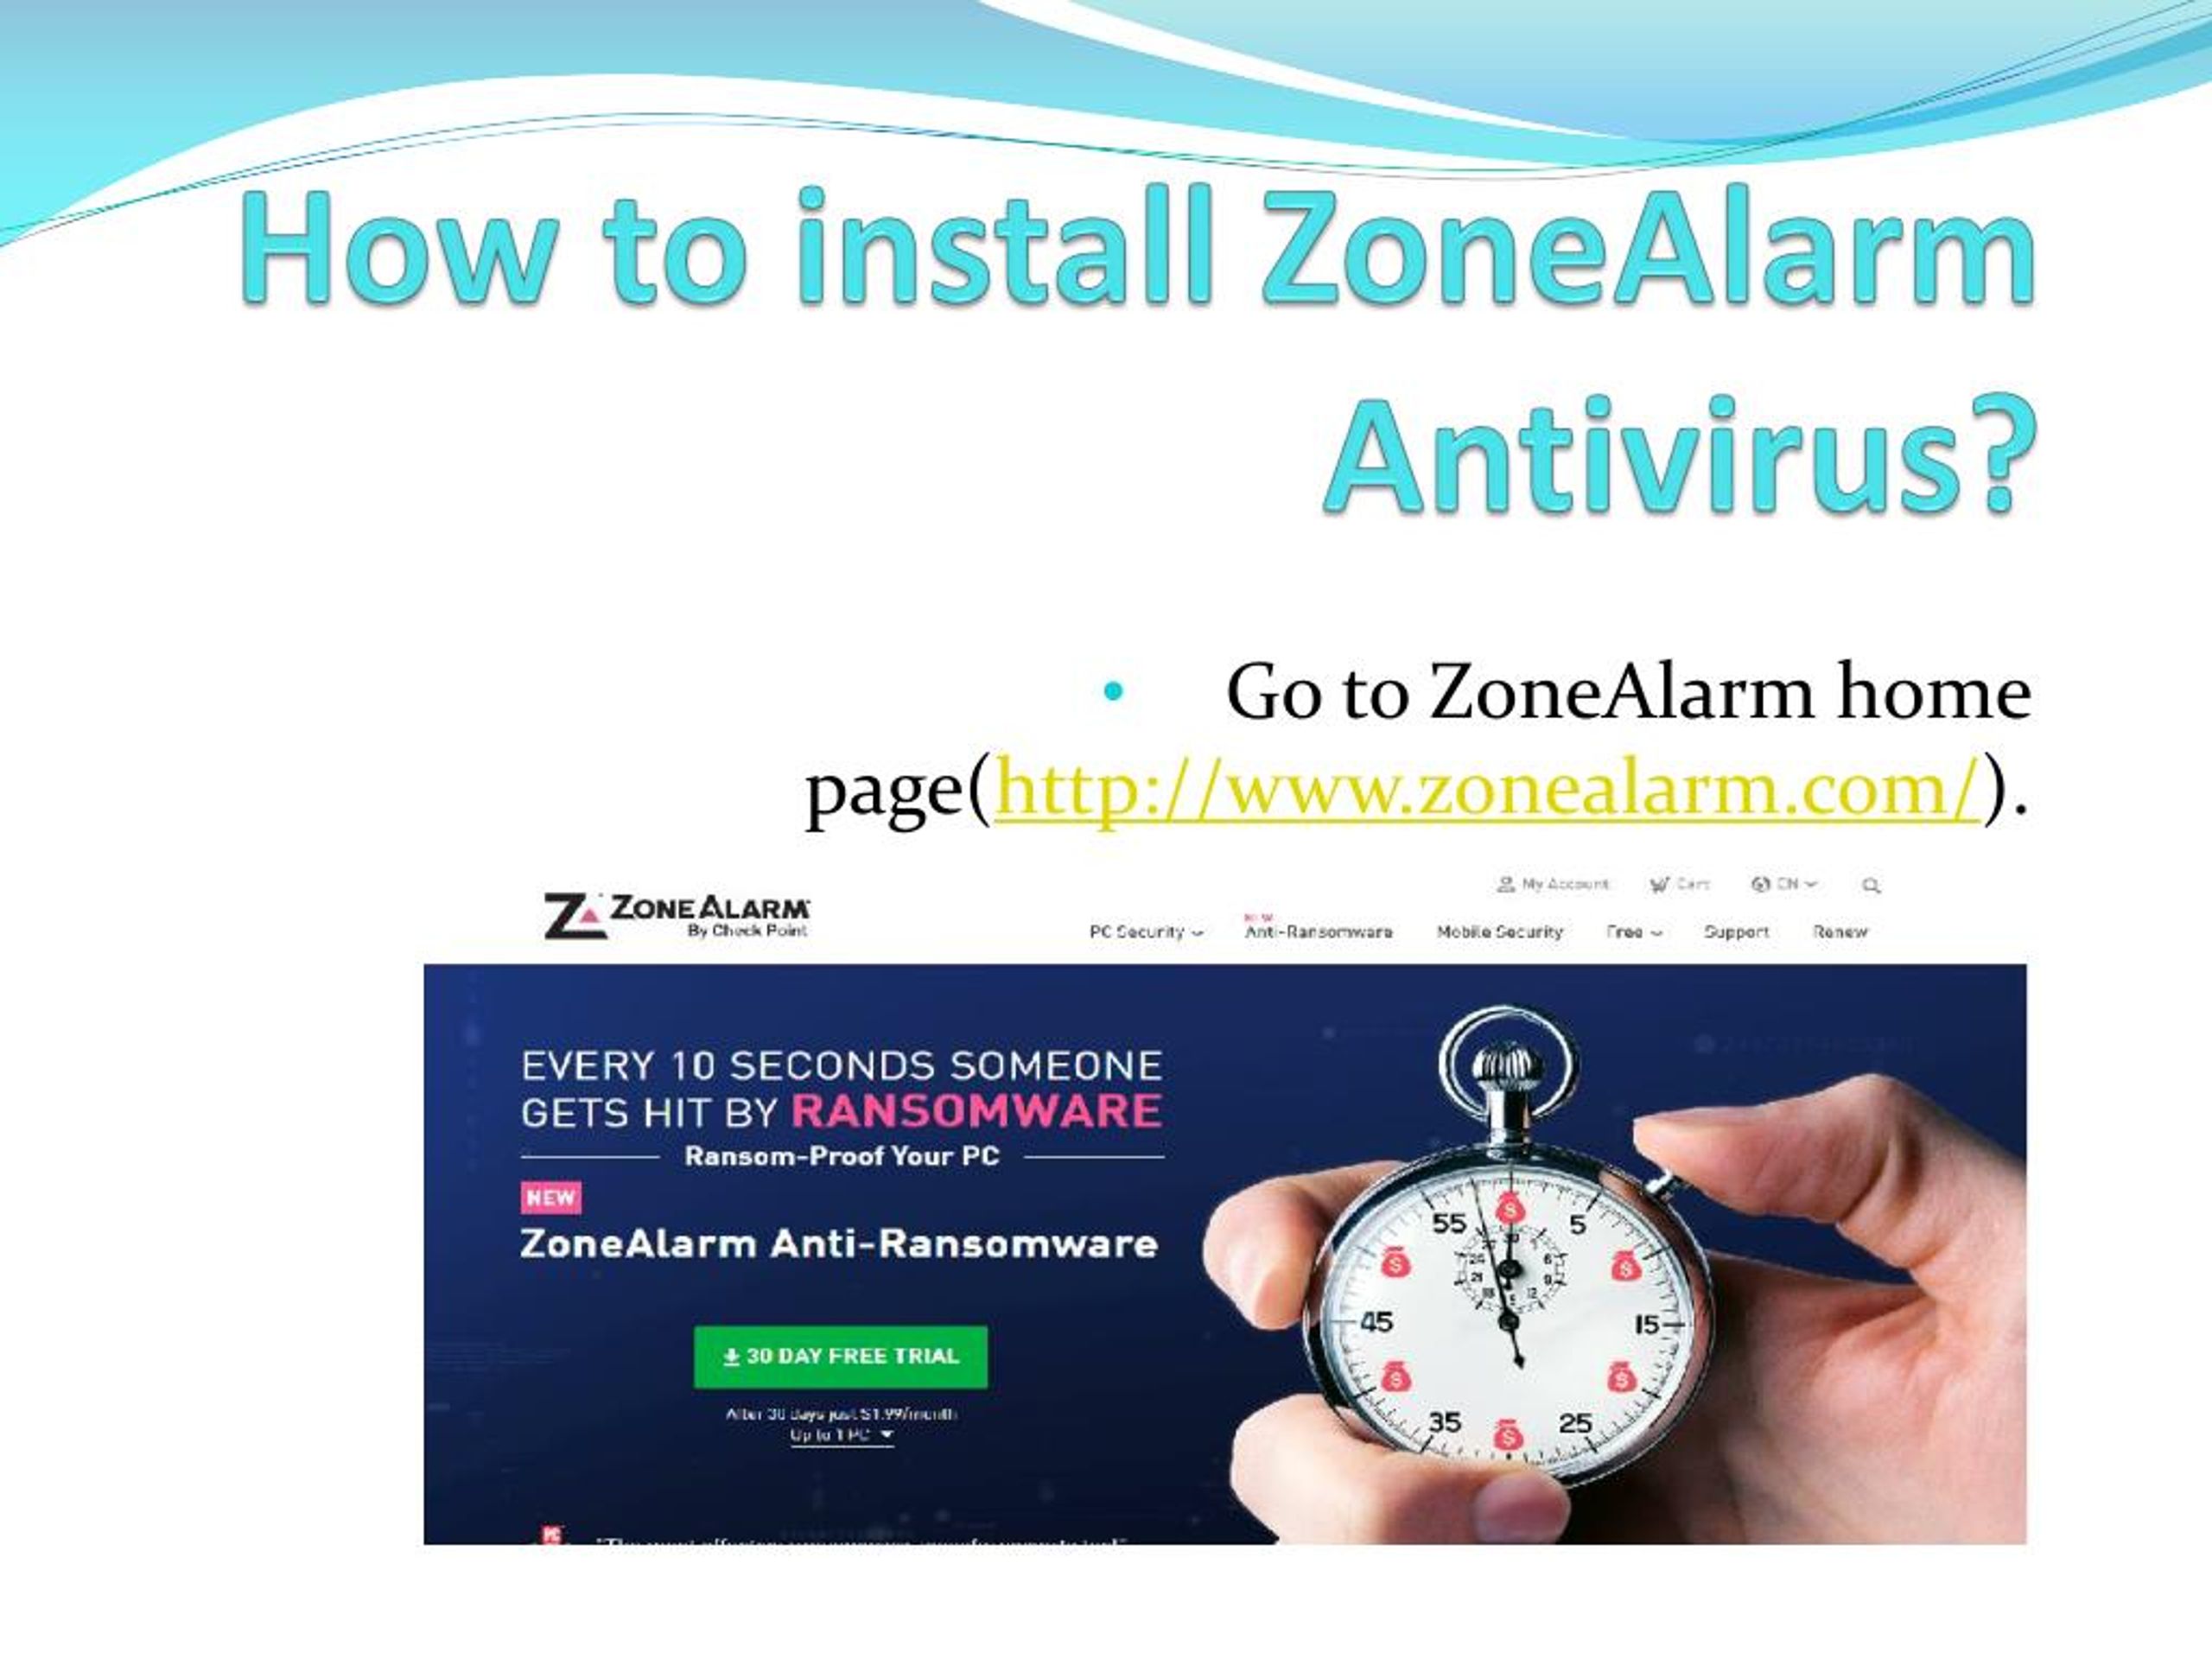 zonealarm antivirus not properly set